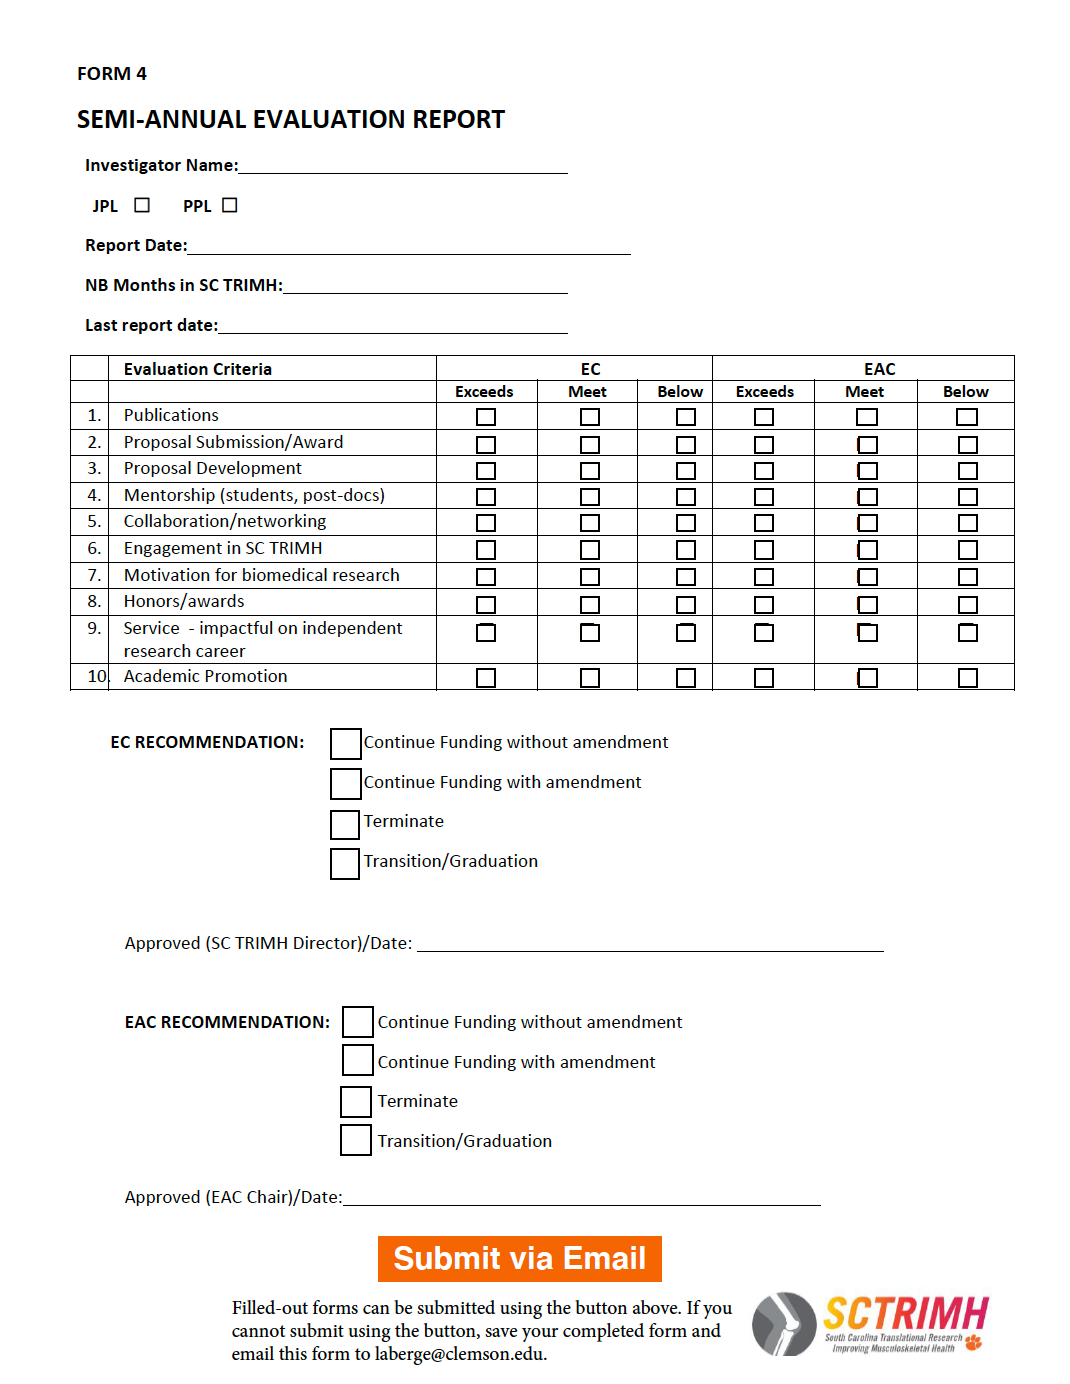 Semi-annual evaluation report form